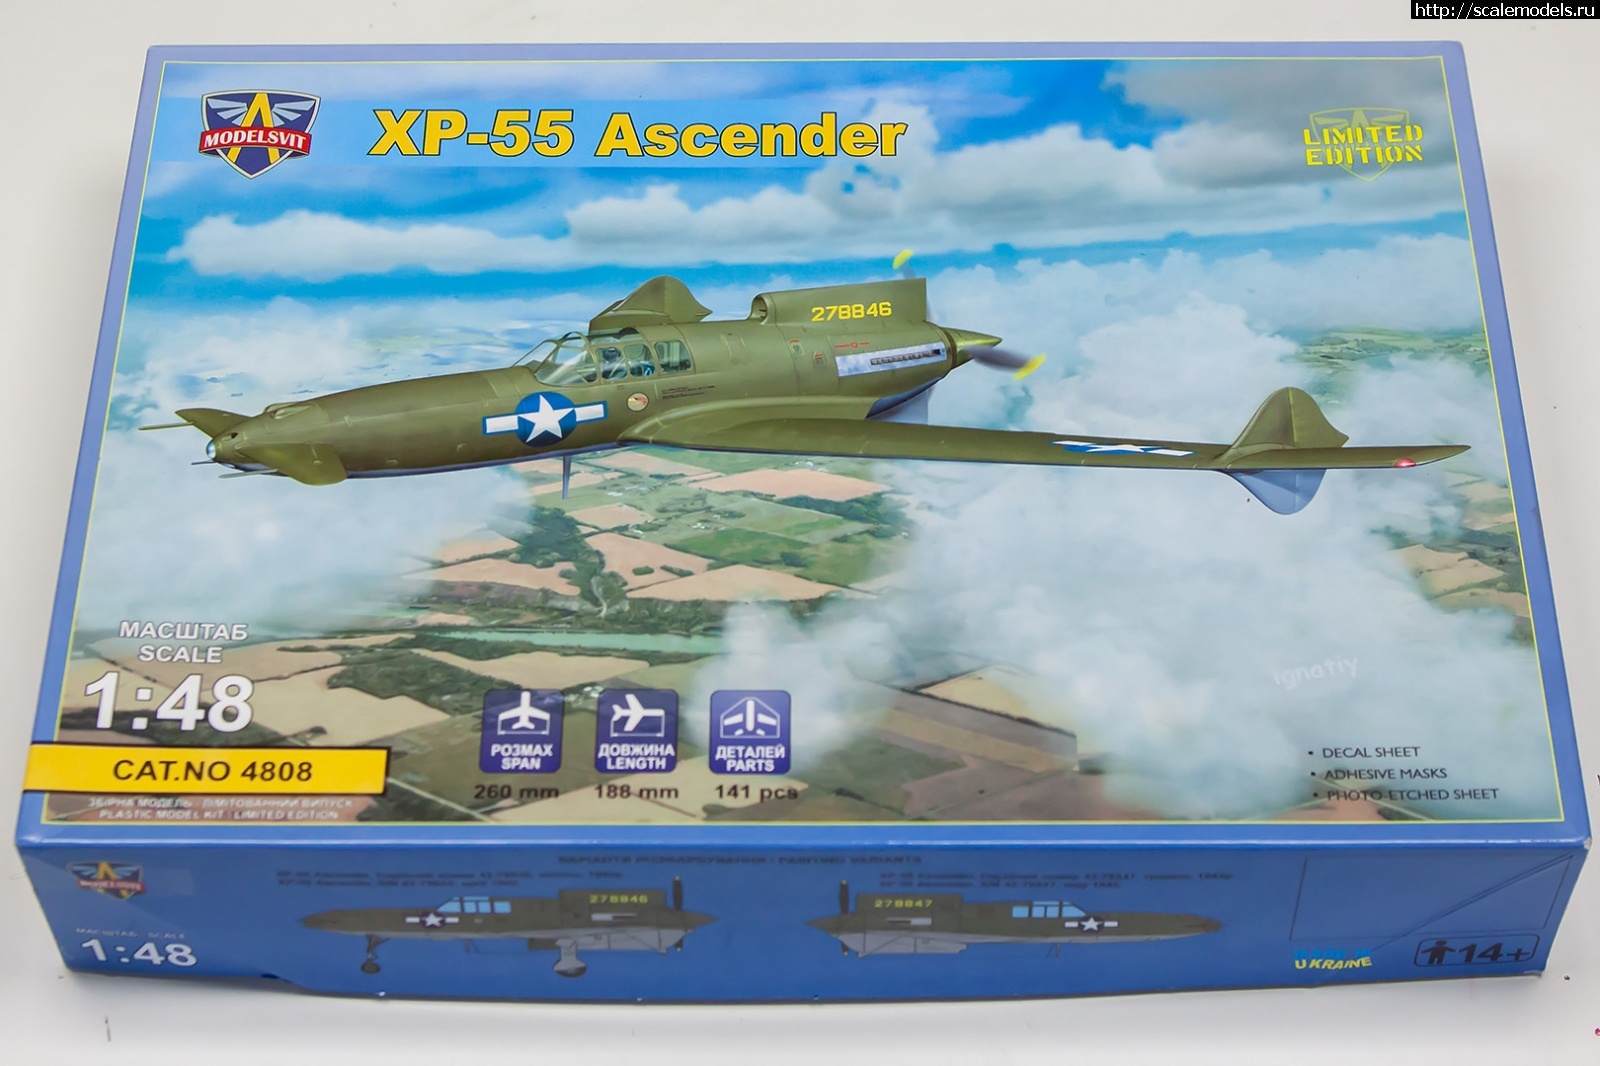 1589883420__MG_4123.jpg : Curtiss XP-55 Ascender (Modelsvit, 1:48)  